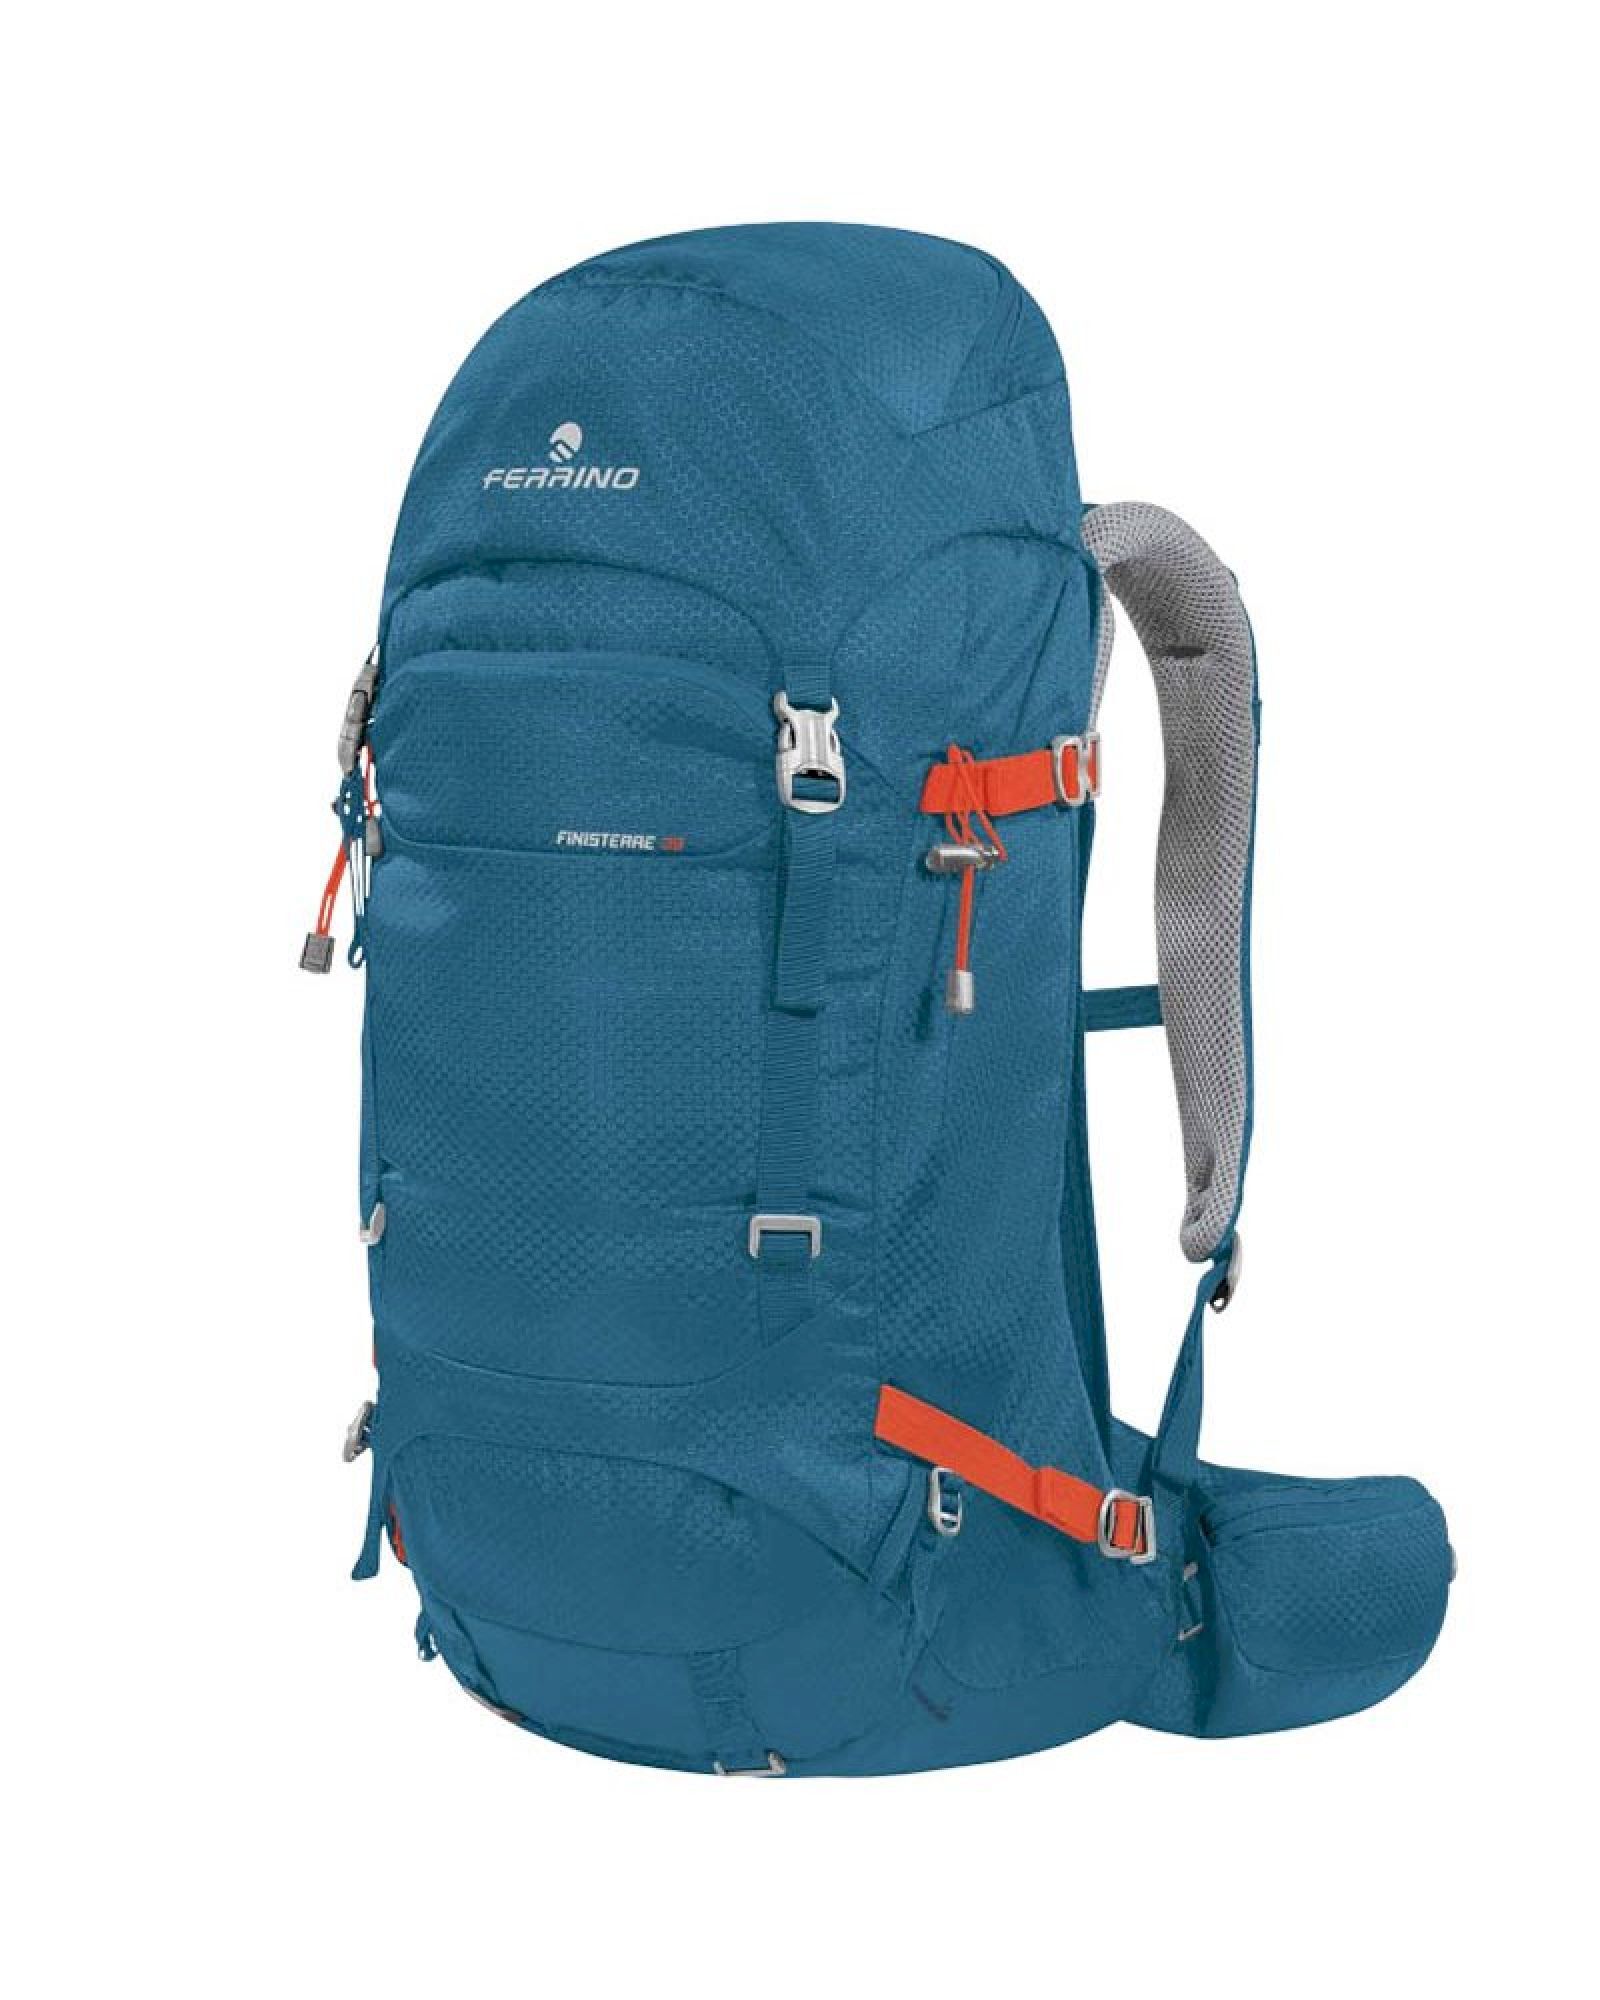 Ferrino Finisterre 38 - Walking backpack